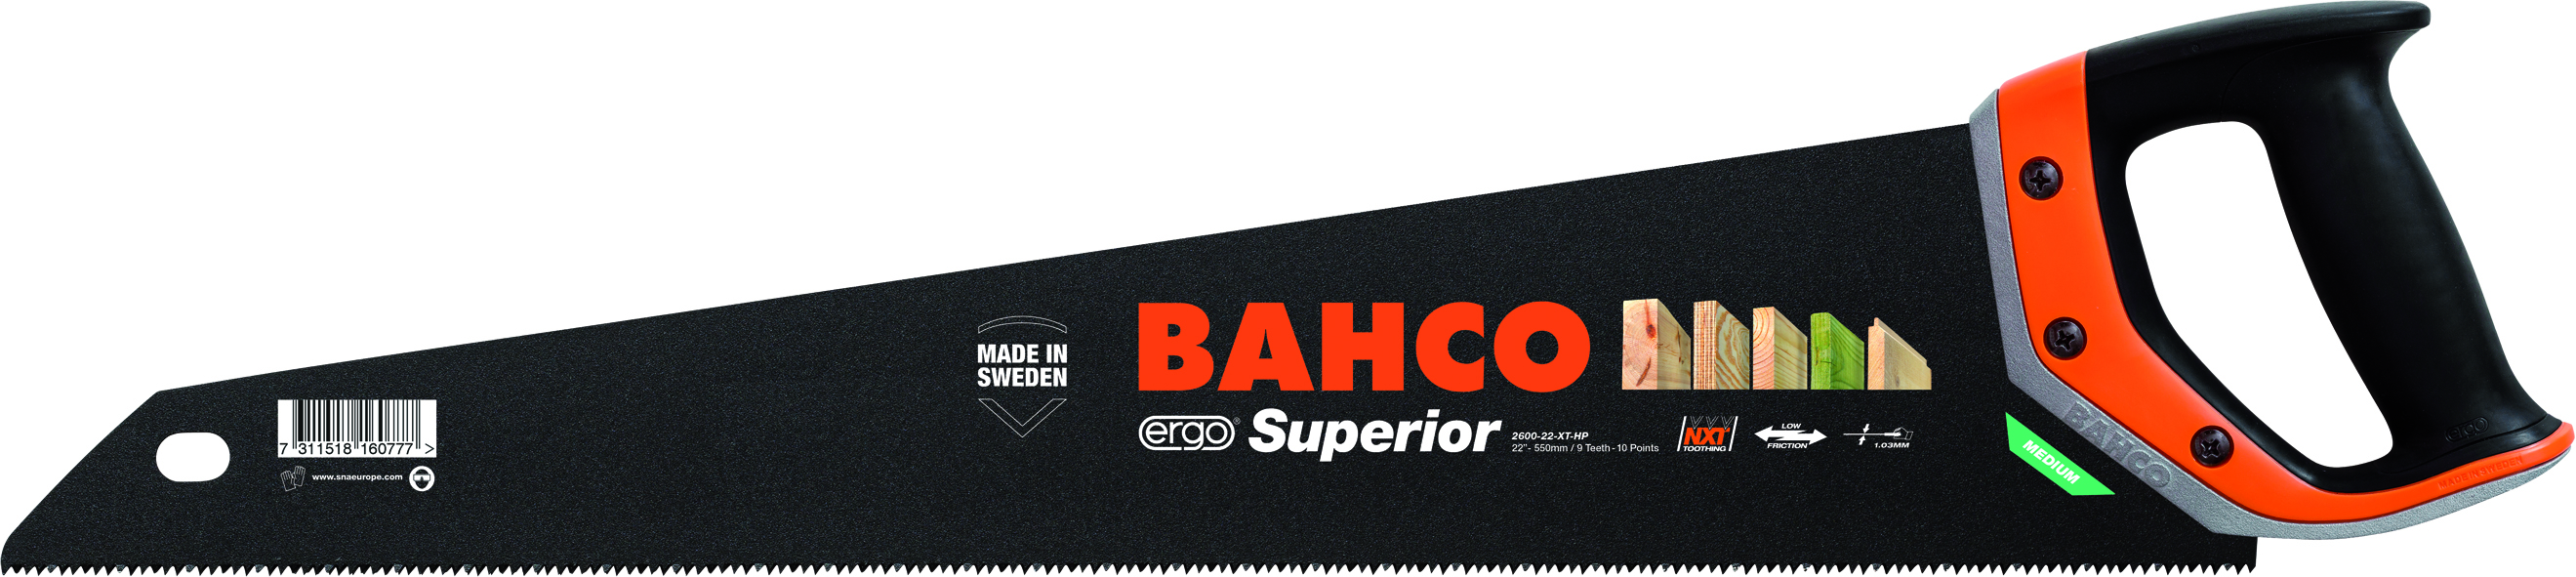 Bahco Superior 2600XT håndsag